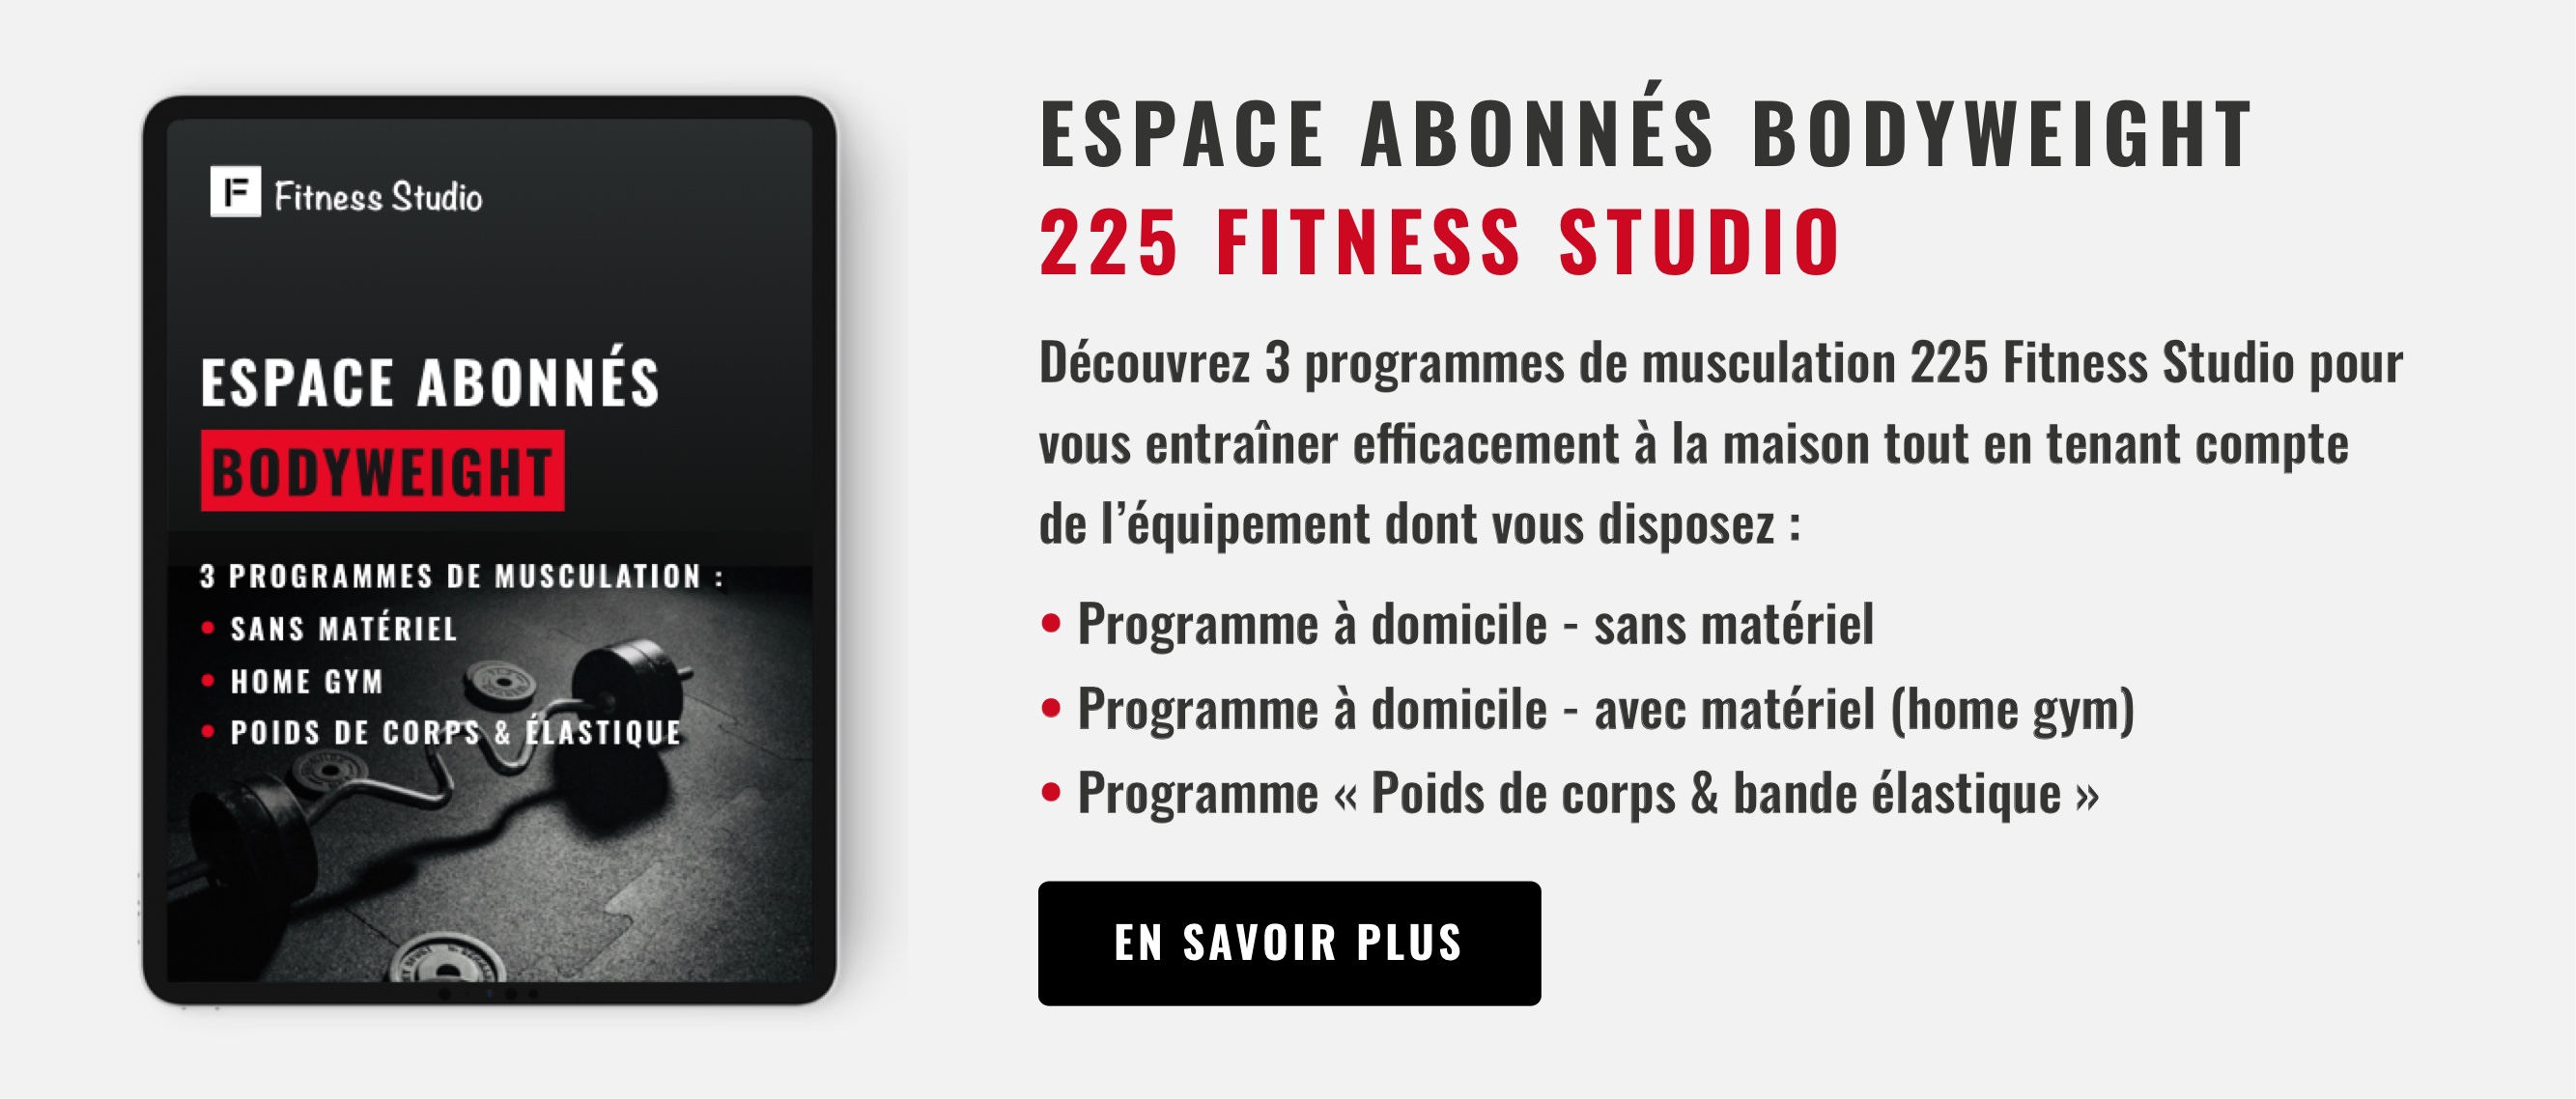 espace abonné bodyweight - 225 Fitness Studio